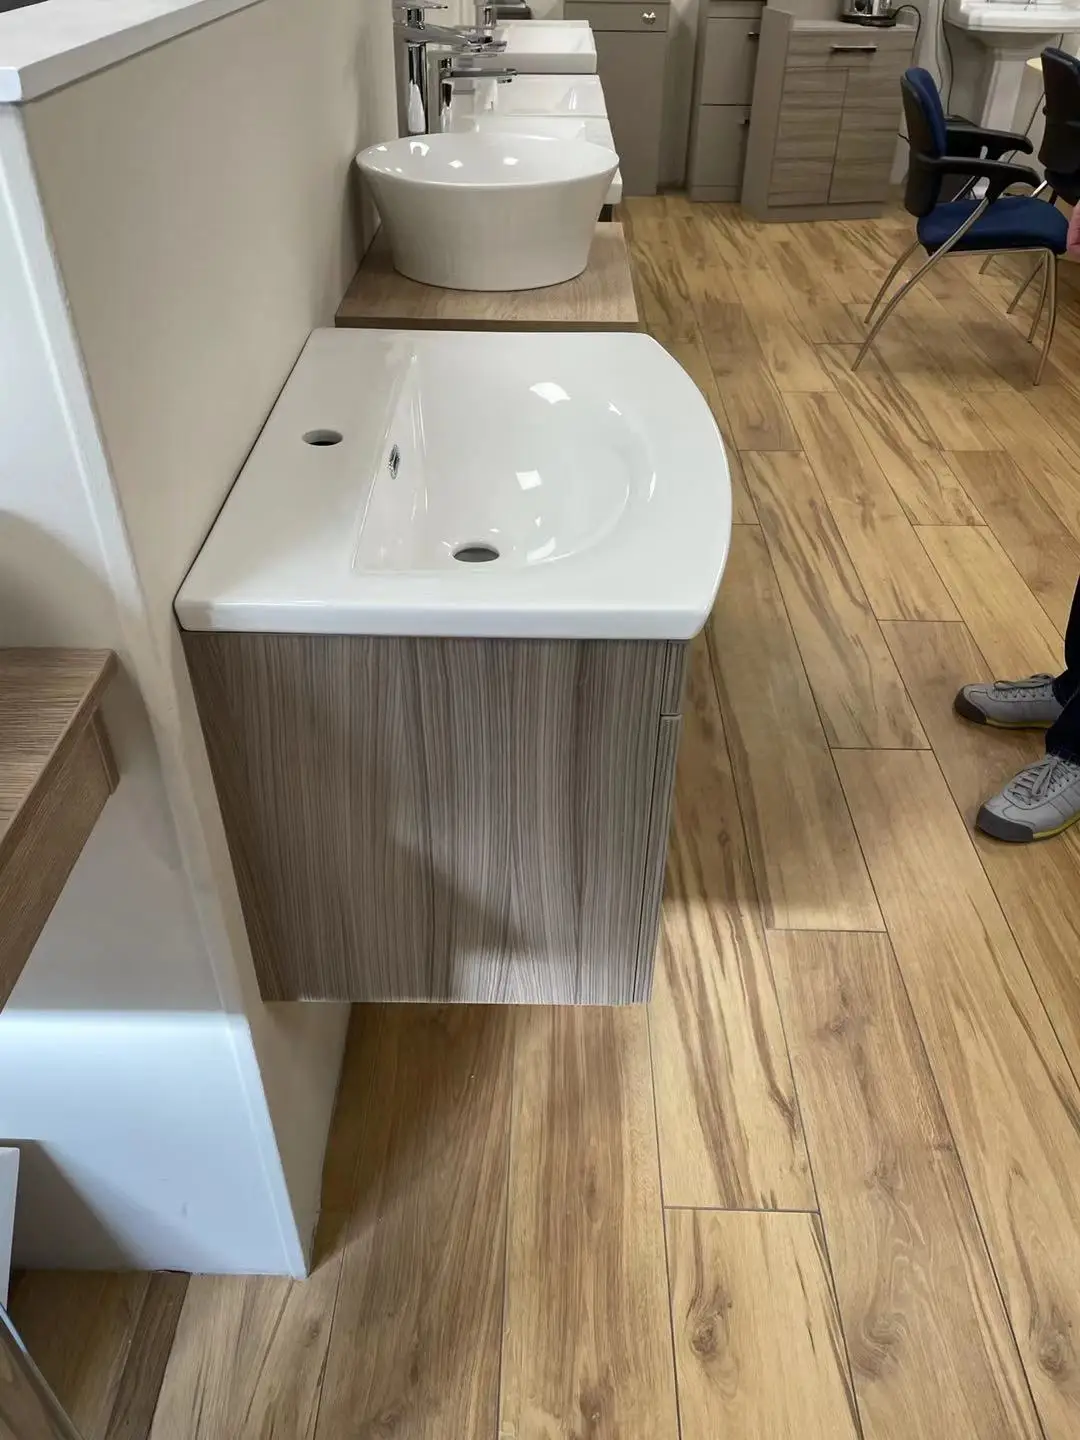 
PATE new ceramic bathroom vanity arc-shape sink manufacturer Vitreous China washroom ceramic hand wash basin 